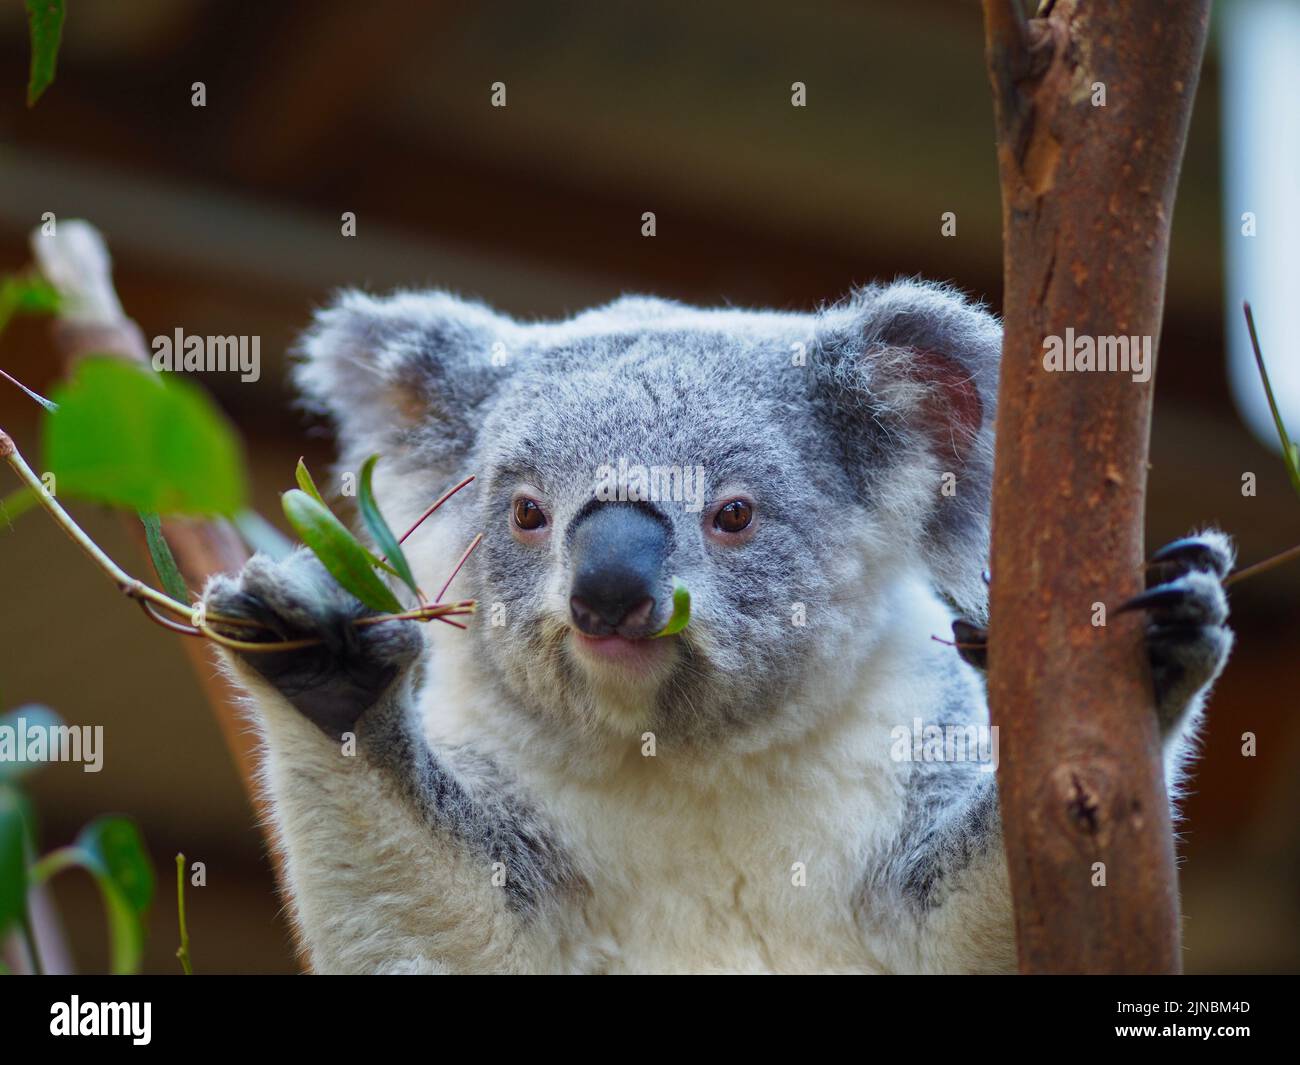 Adorable charming young Koala happily munching Eucalyptus leaves. Stock Photo